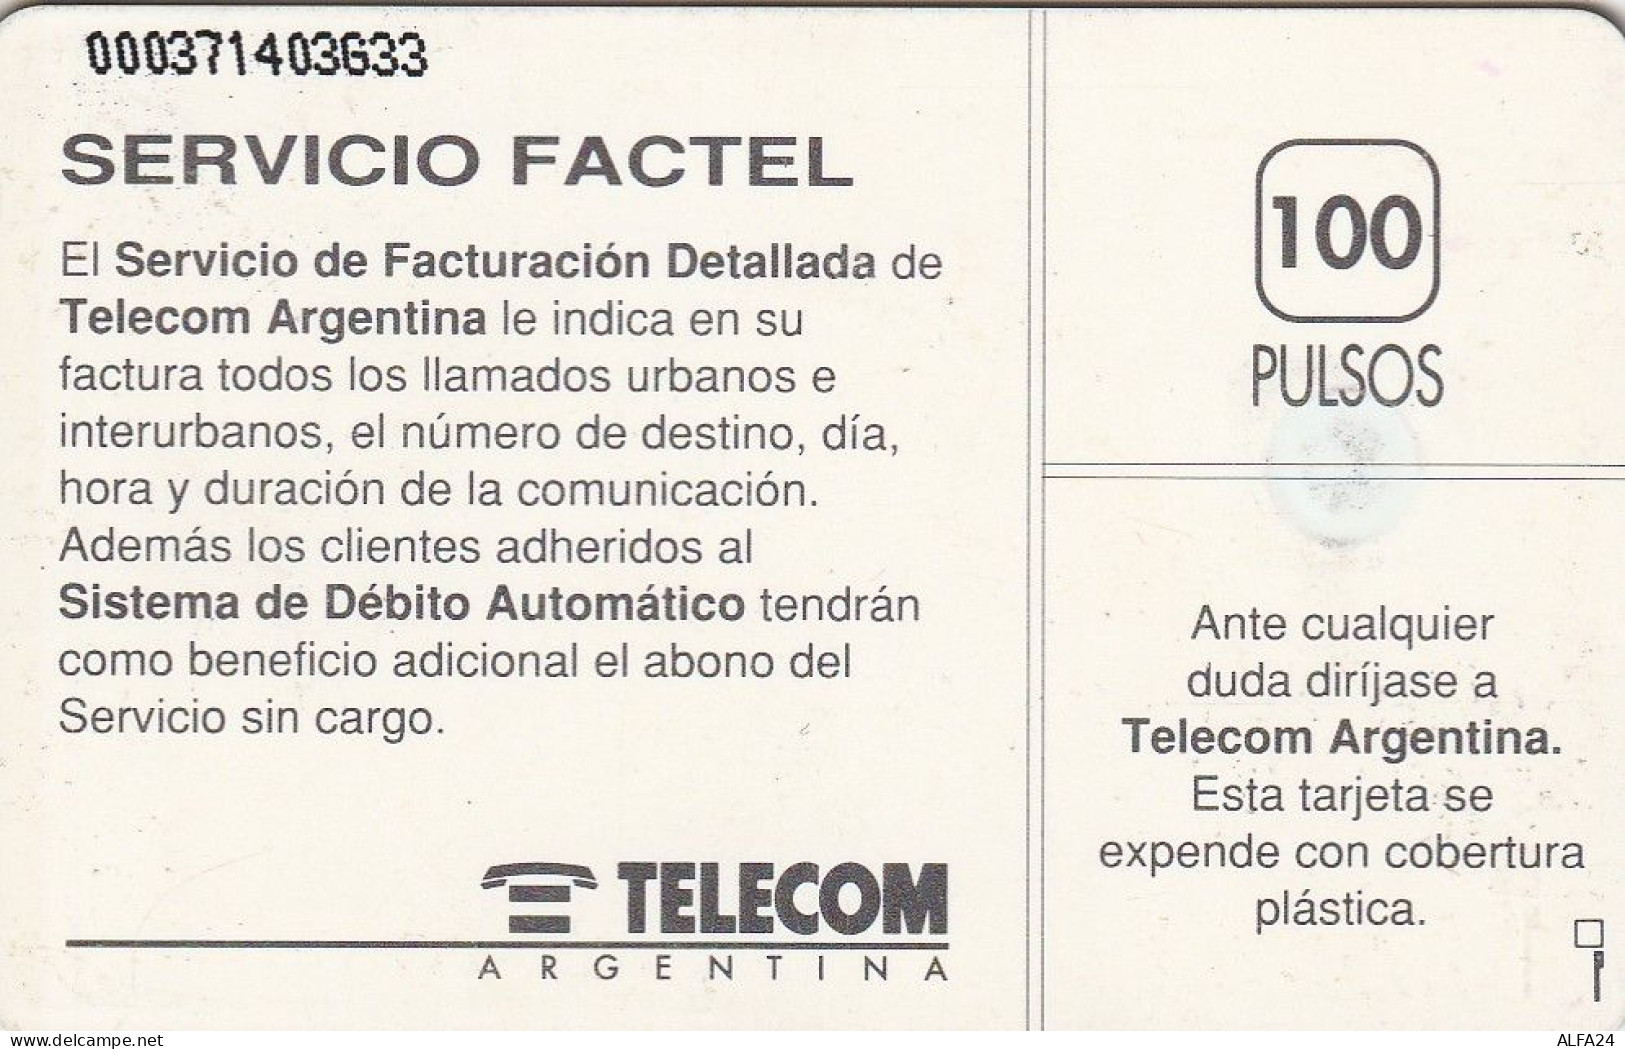 PHONE CARD ARGENTINA  (CV6859 - Argentina